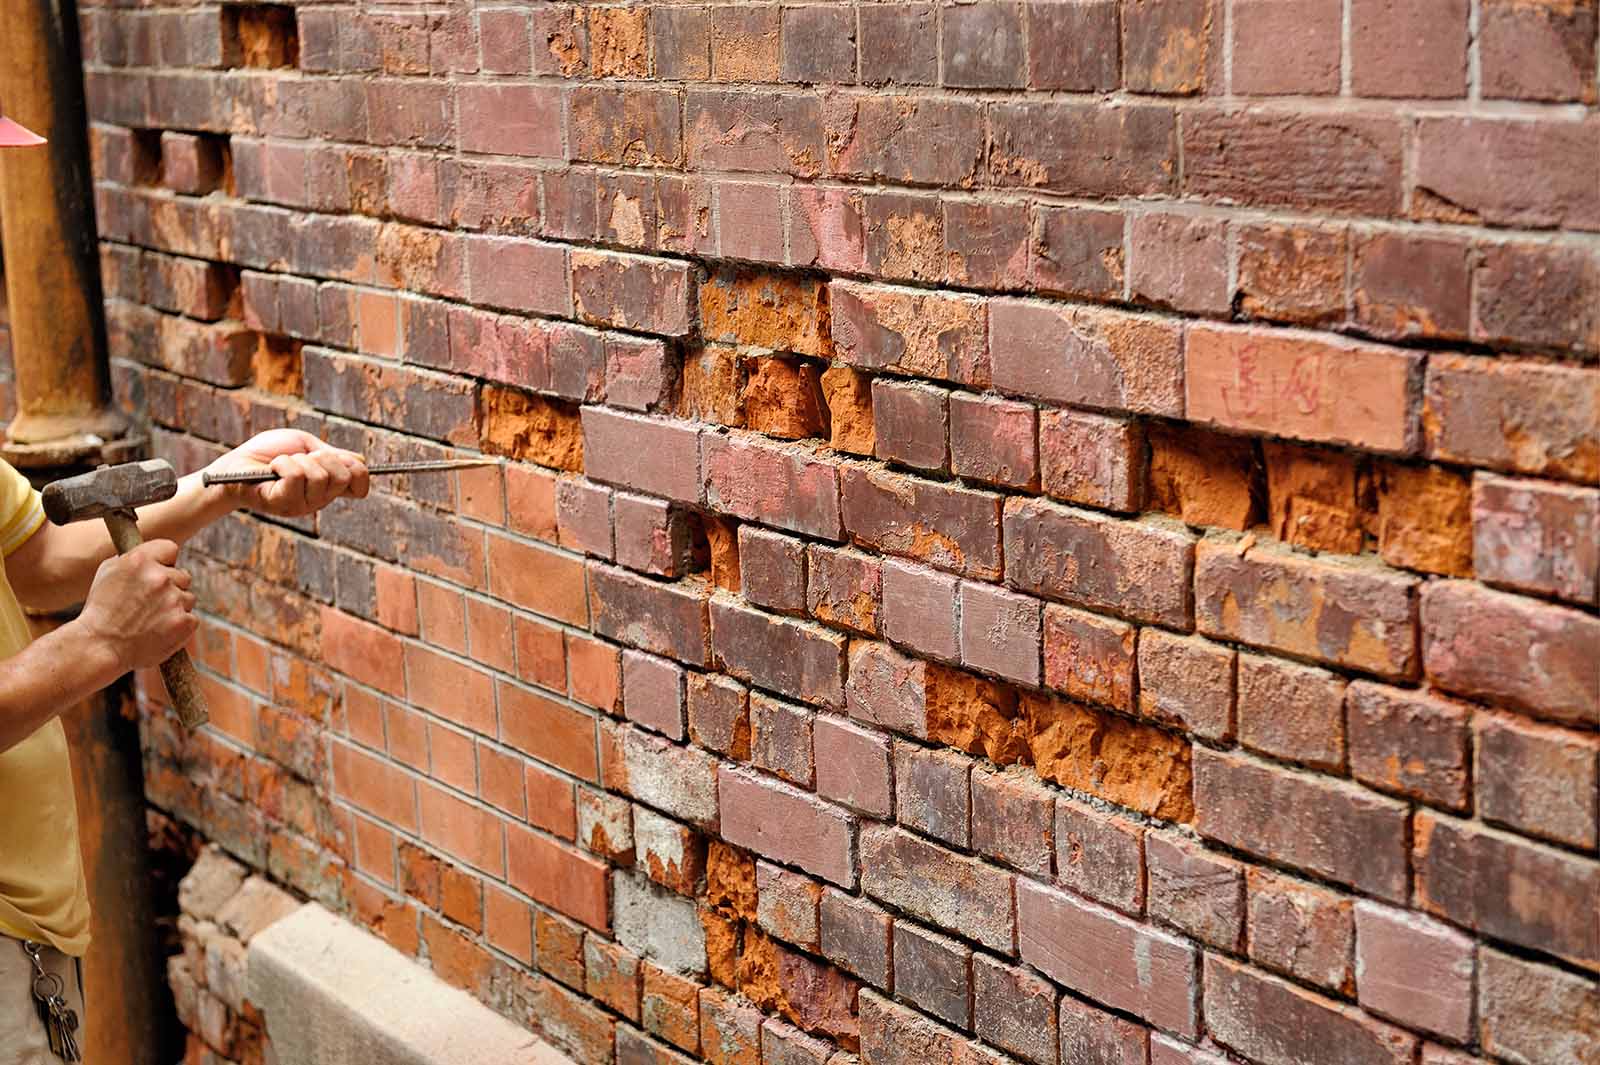 brickwork maintenance needs signs of brick deterioration on wall